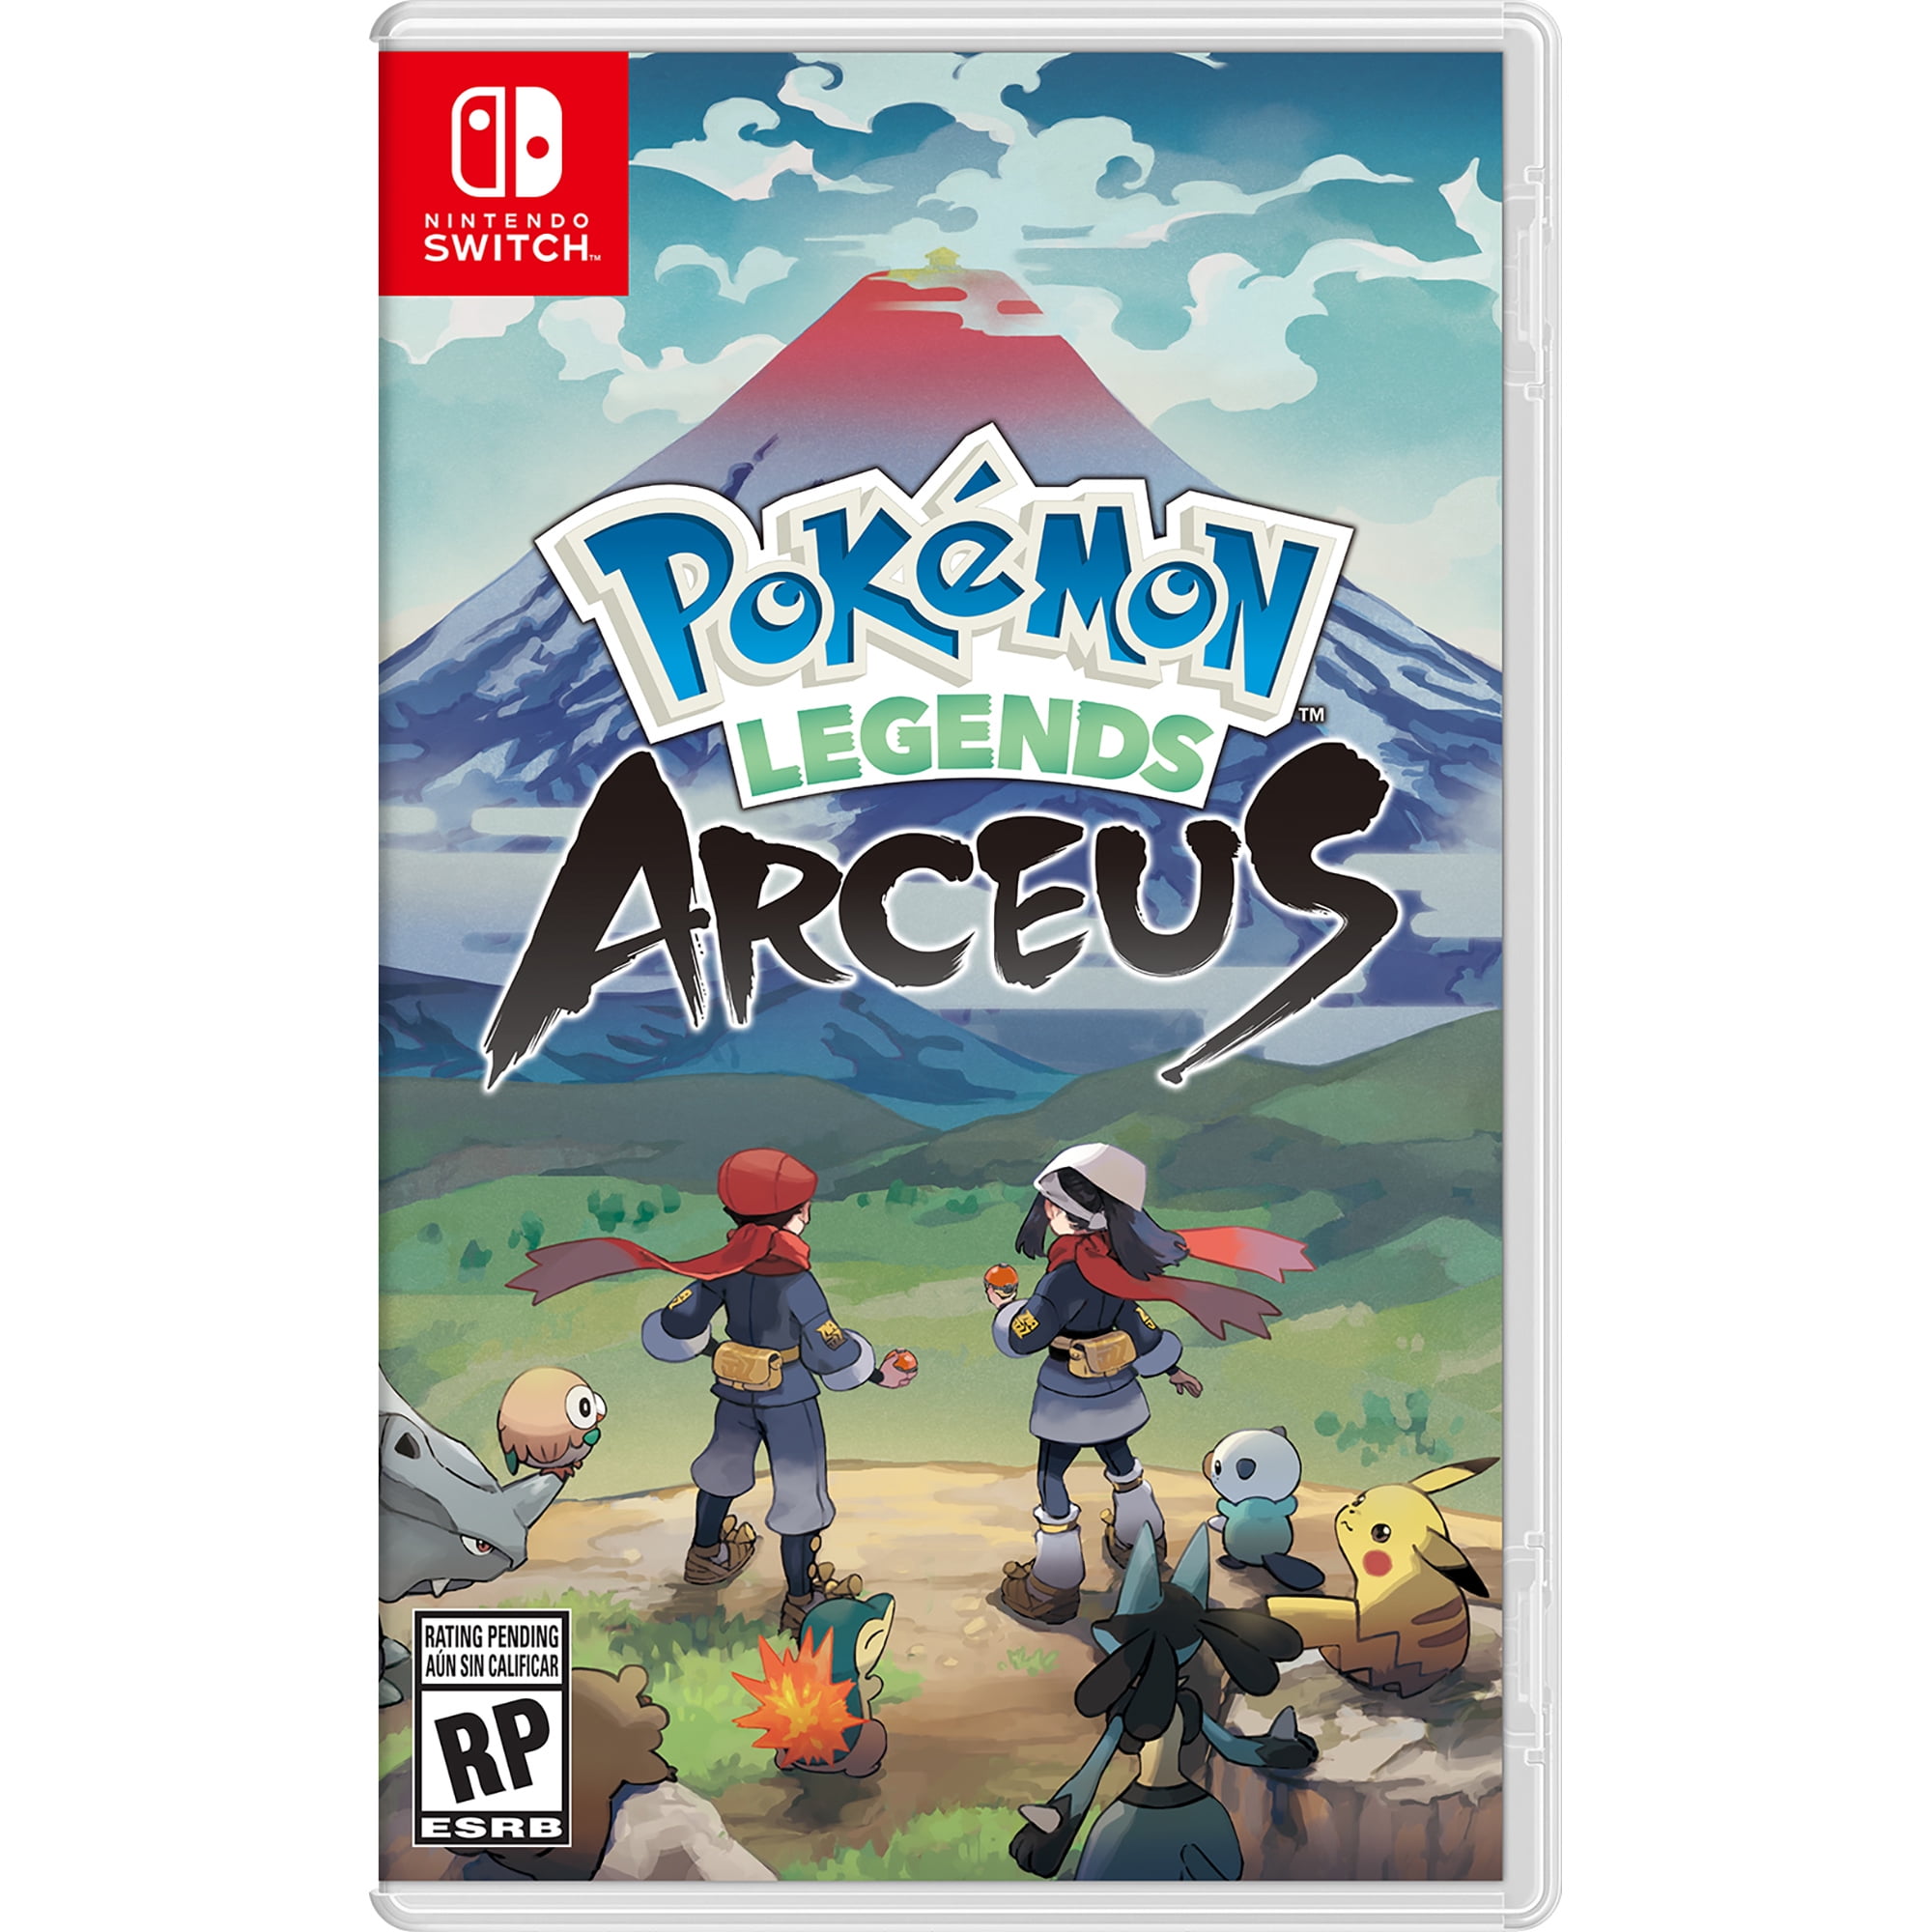 Pokemon Legends Arceus, Nintendo Switch, [Physical], 045496598044